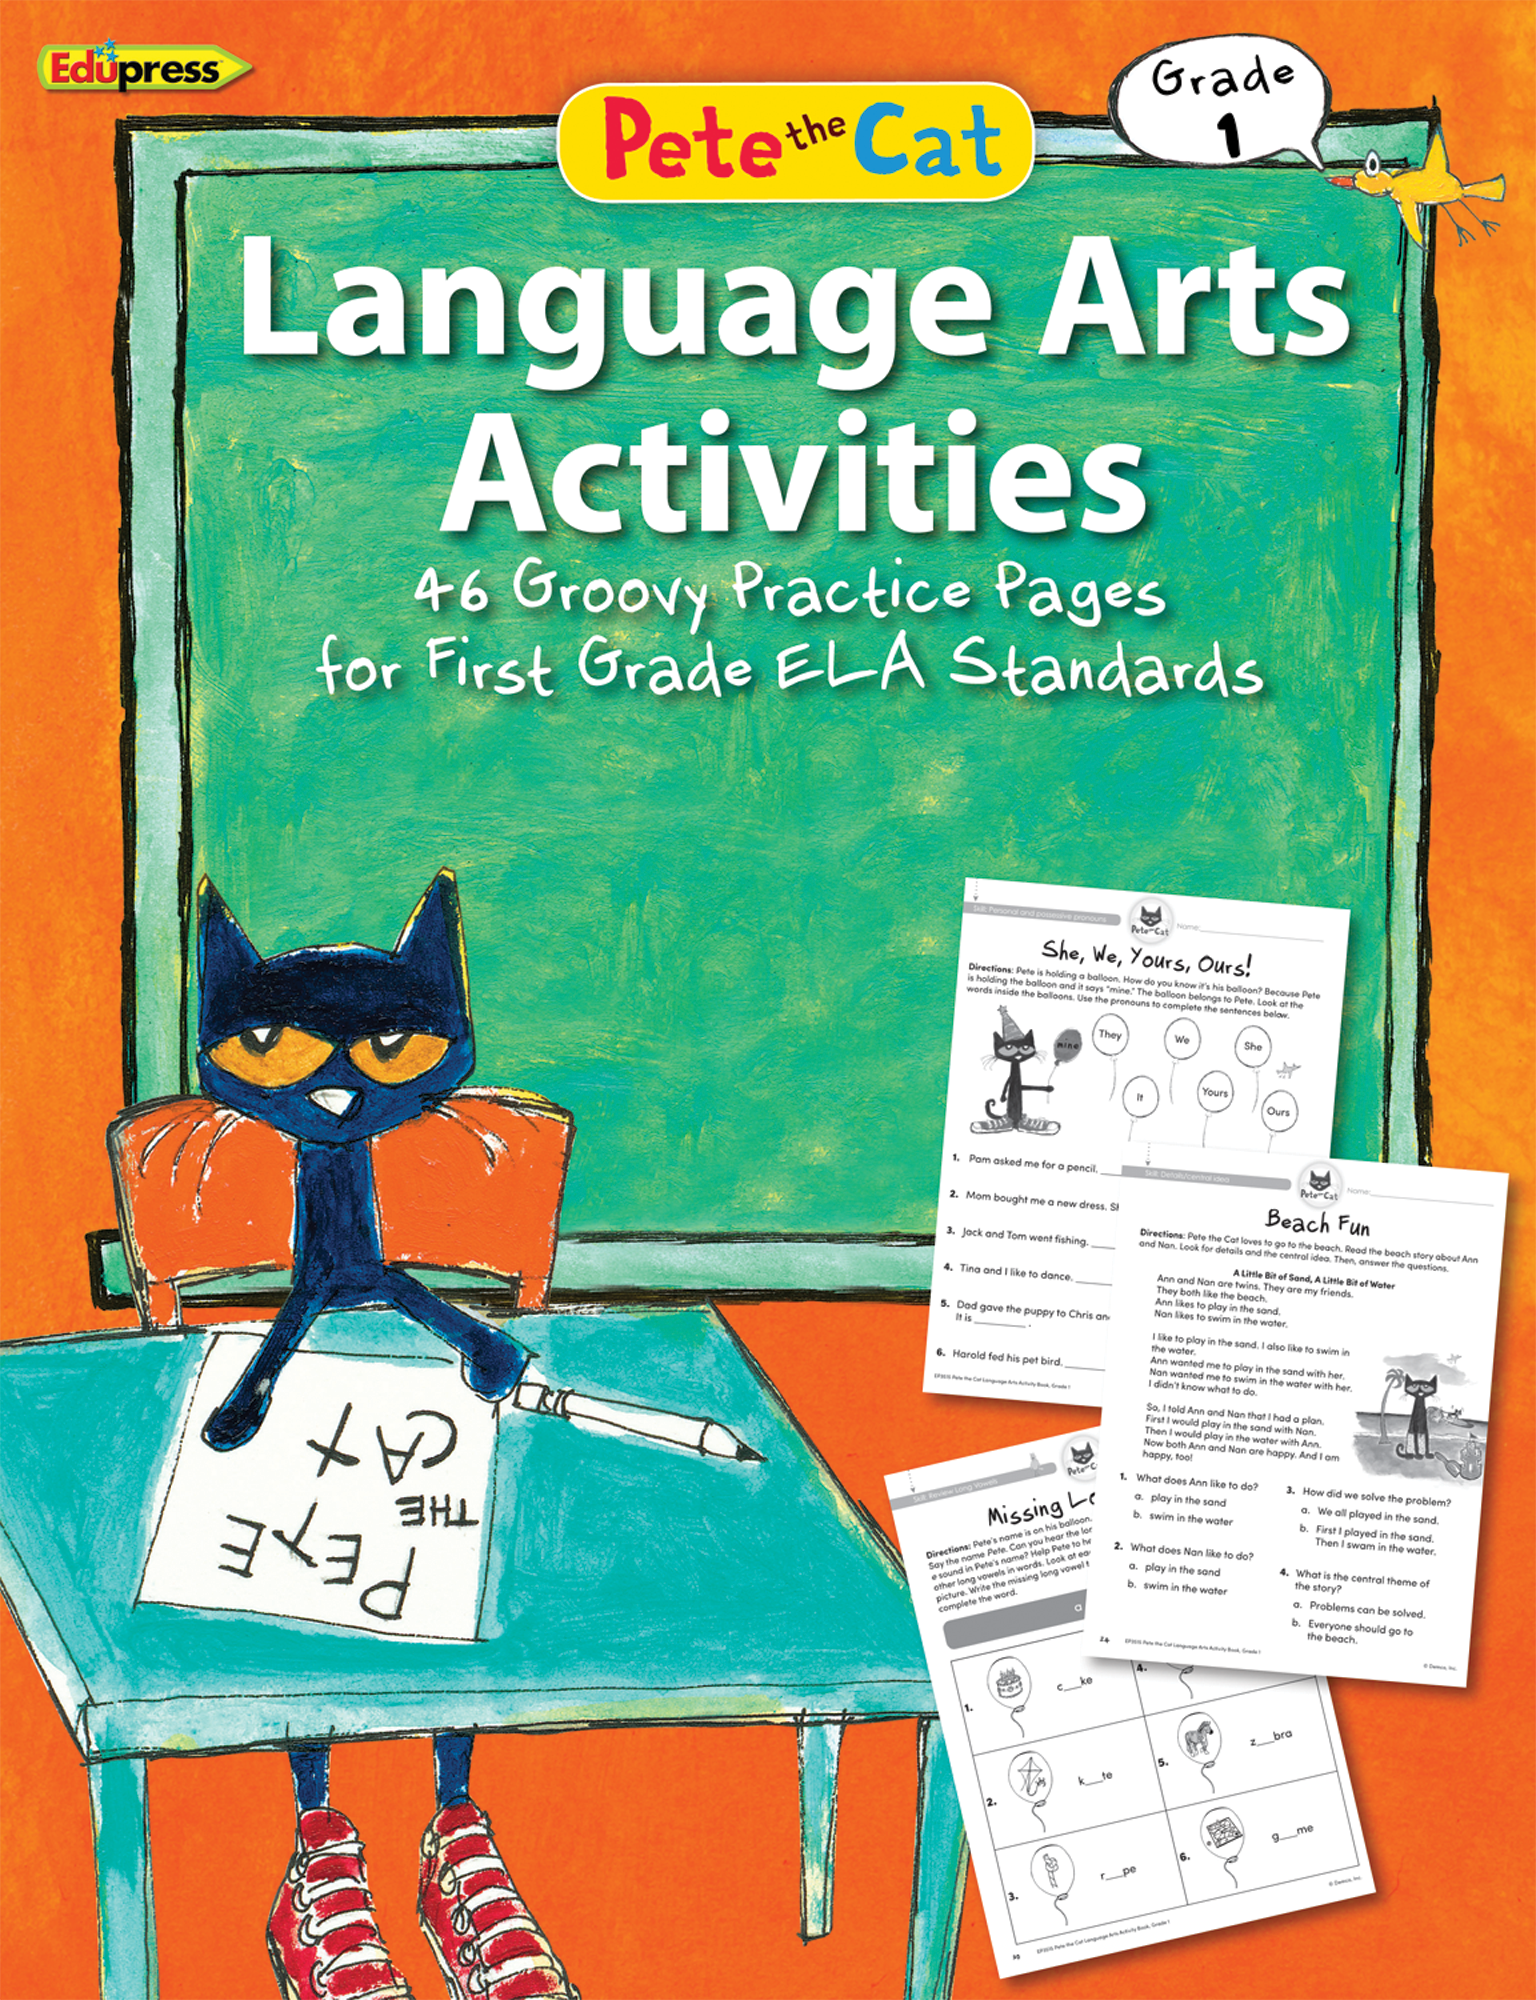 Pete the CatÂ® Language Arts Activities (Gr. 1)